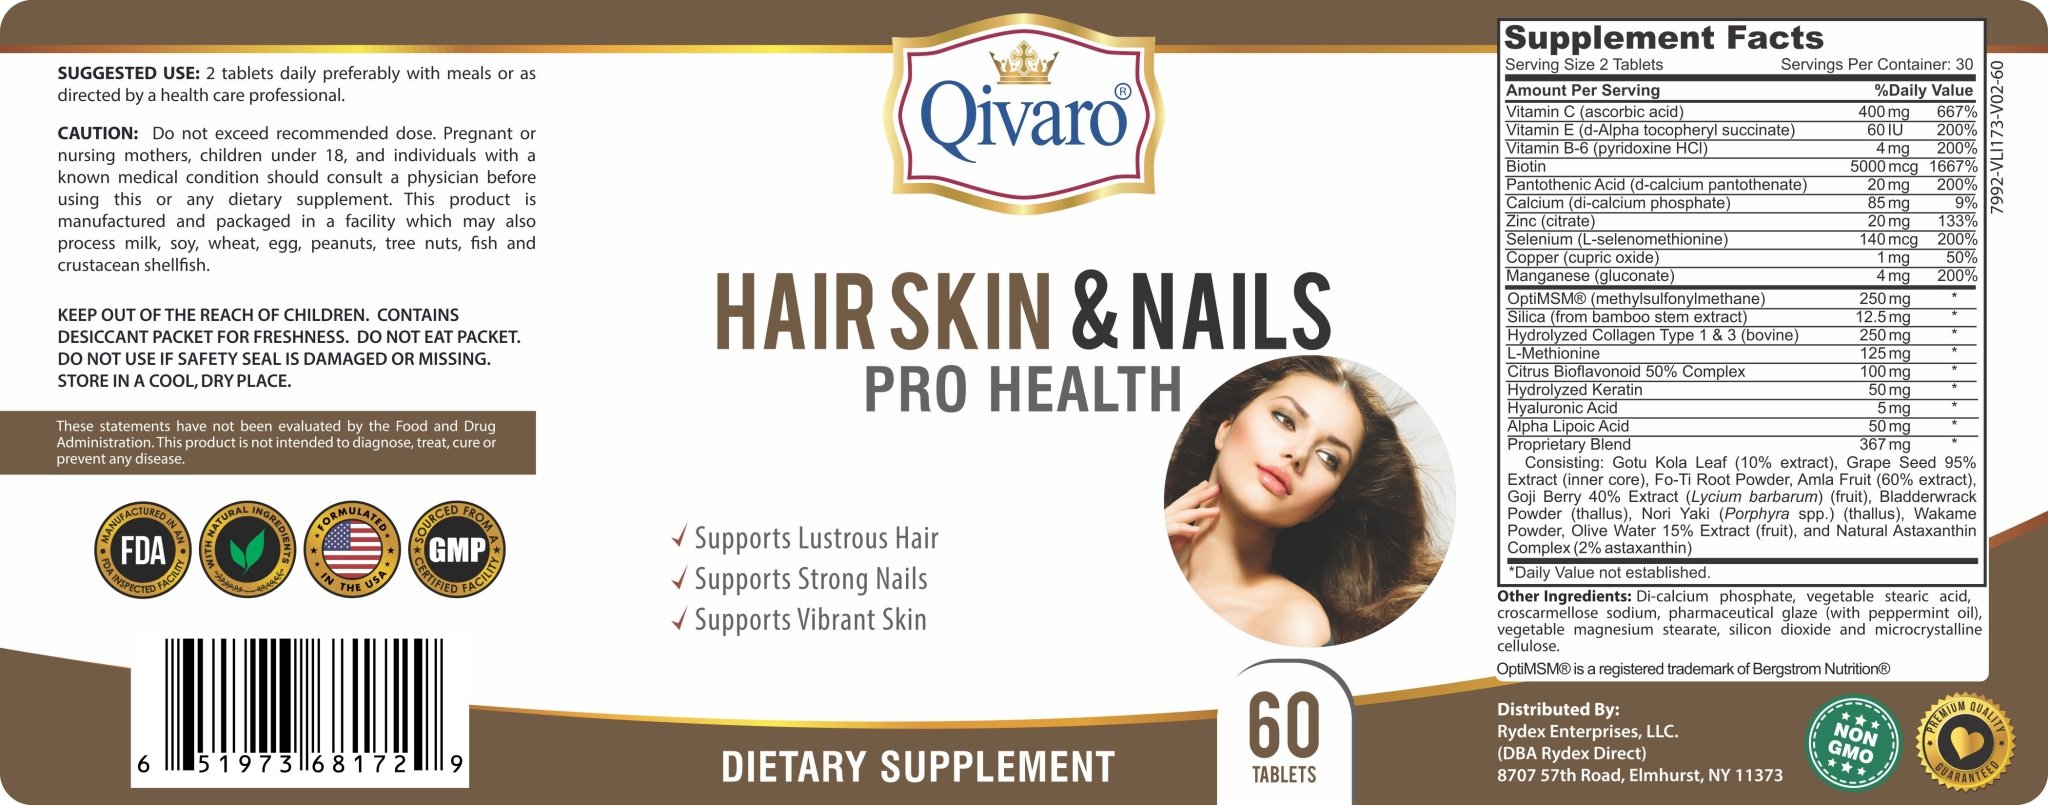 Hair Skin Nails Pro Health By Qivaro (60 tablets) - Qivaro USA